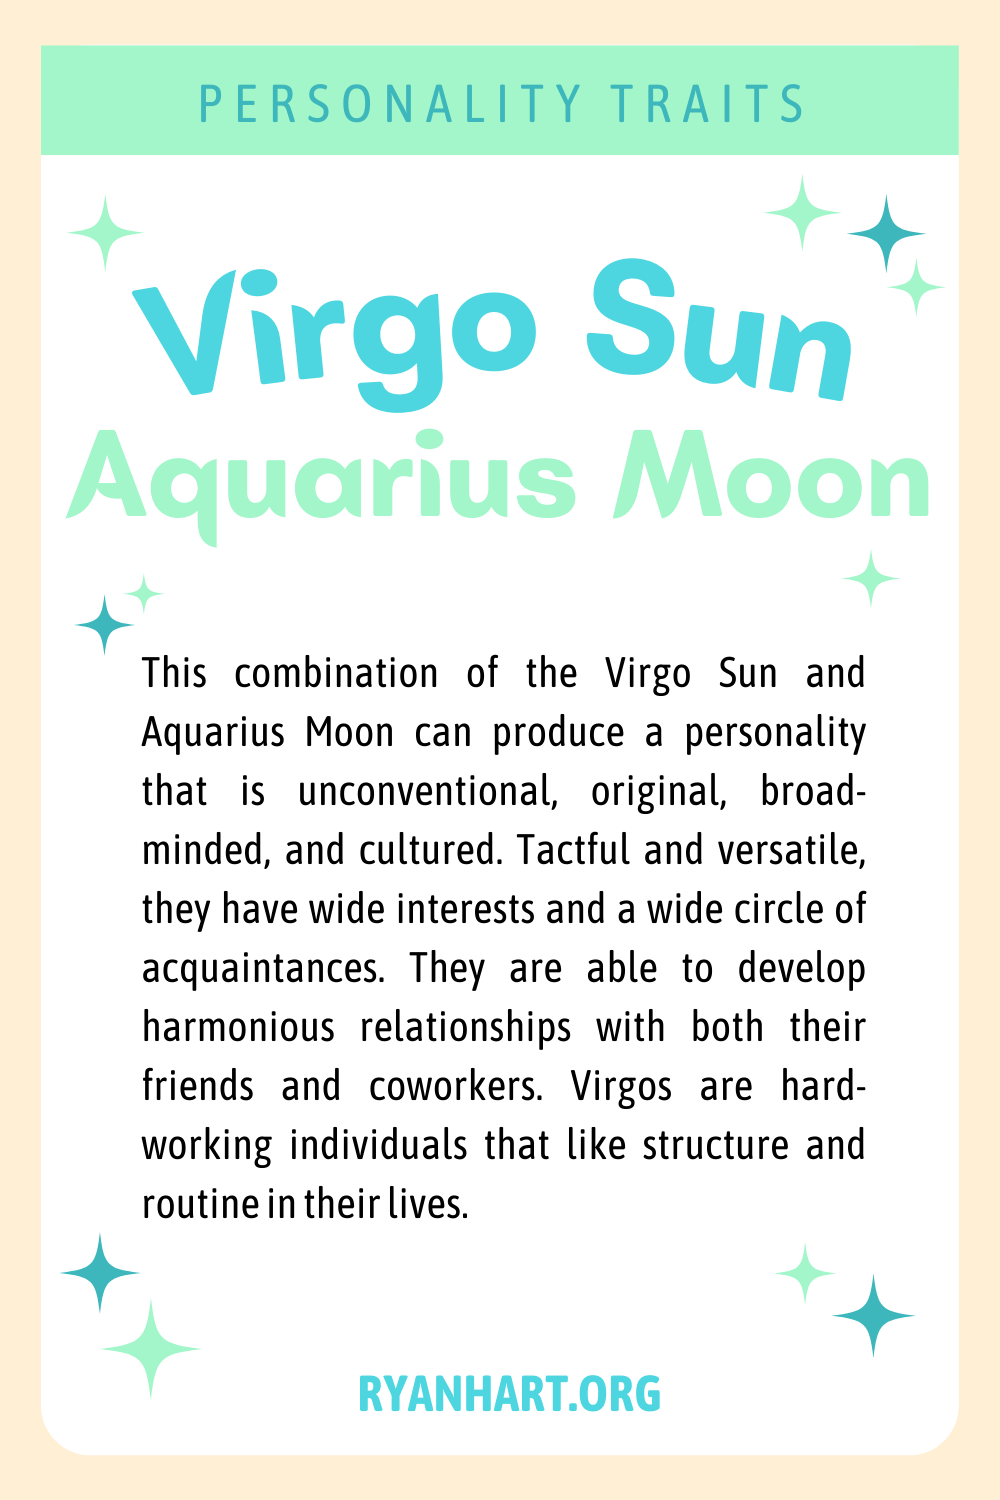 Virgo Sun Aquarius Moon Description